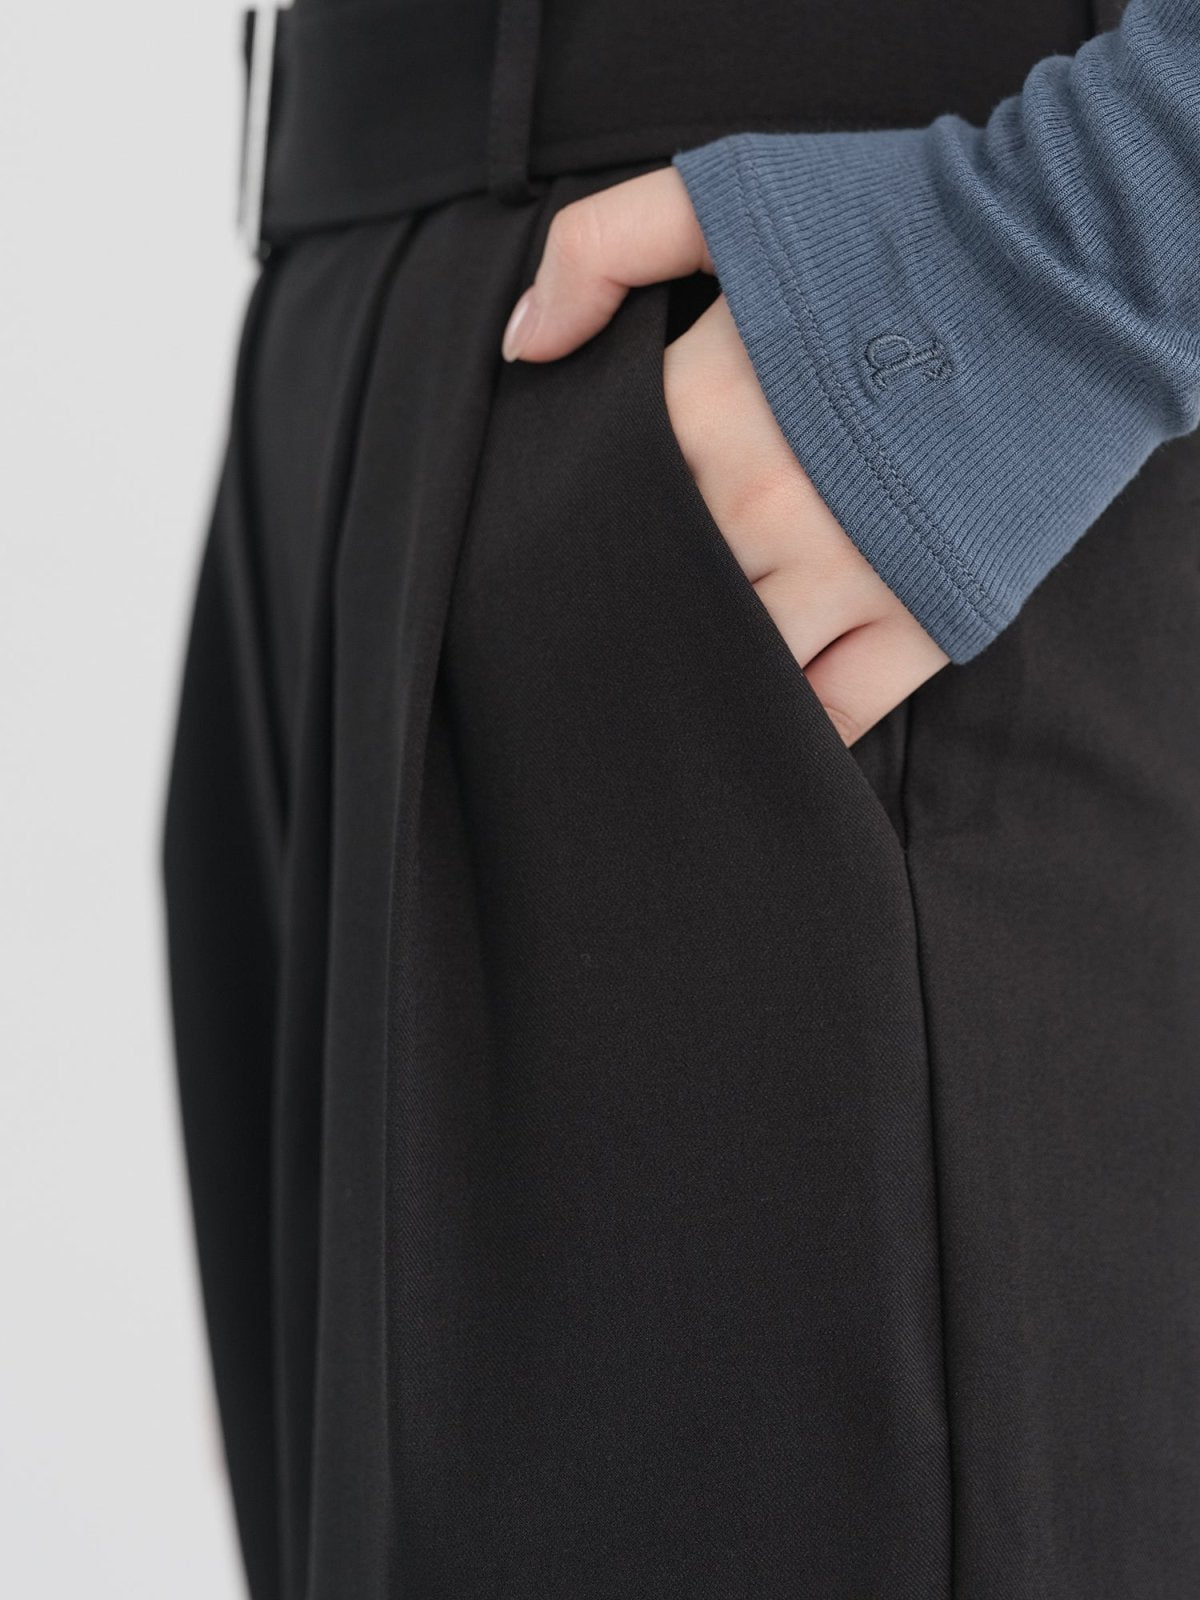 Artemis Belted Wide Leg Trousers (Long/ Short ver.) - DAG-DD1113-23BlackS - Black - Long Ver. (101cm) - S - D'zage Designs